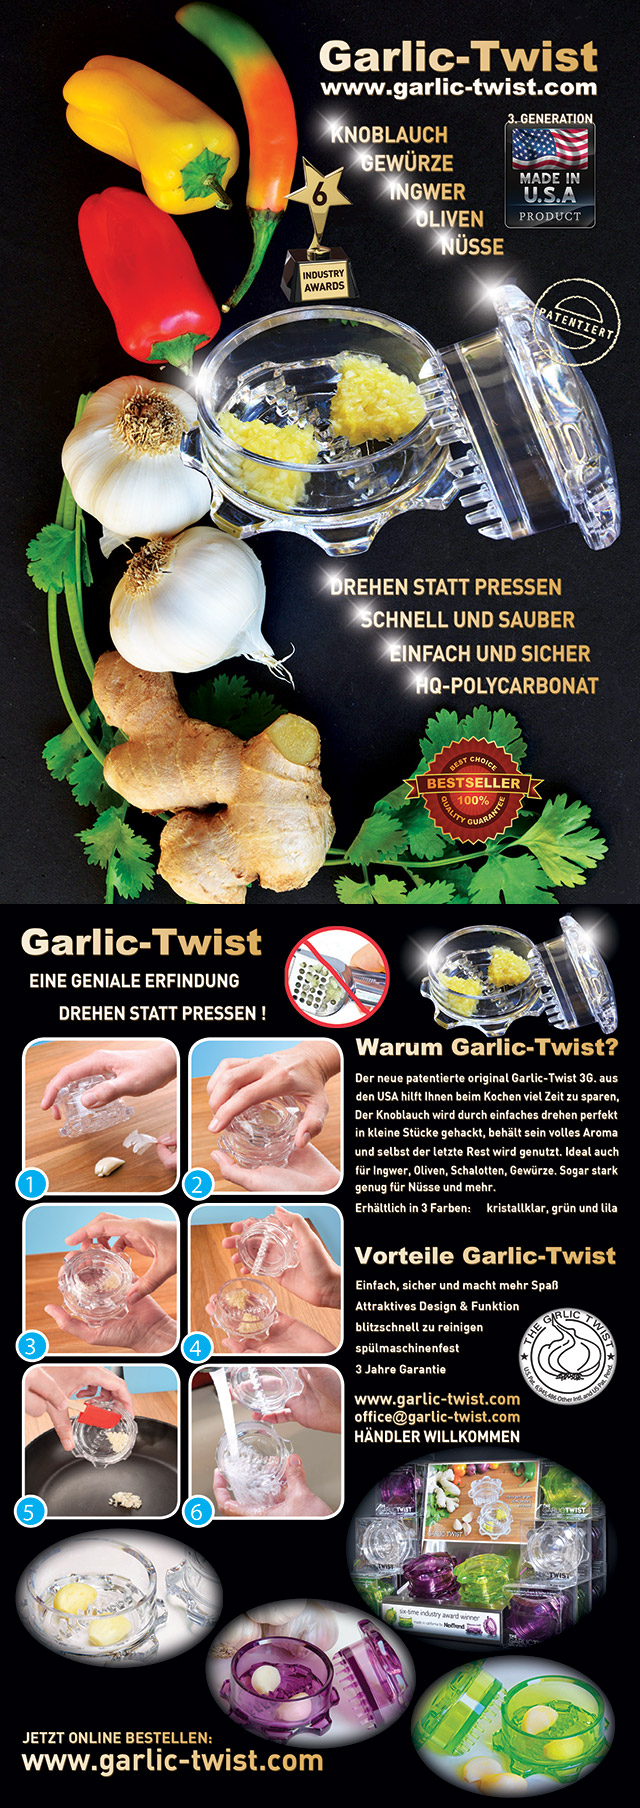 Garlic-Twist 3G. - Kristallklar